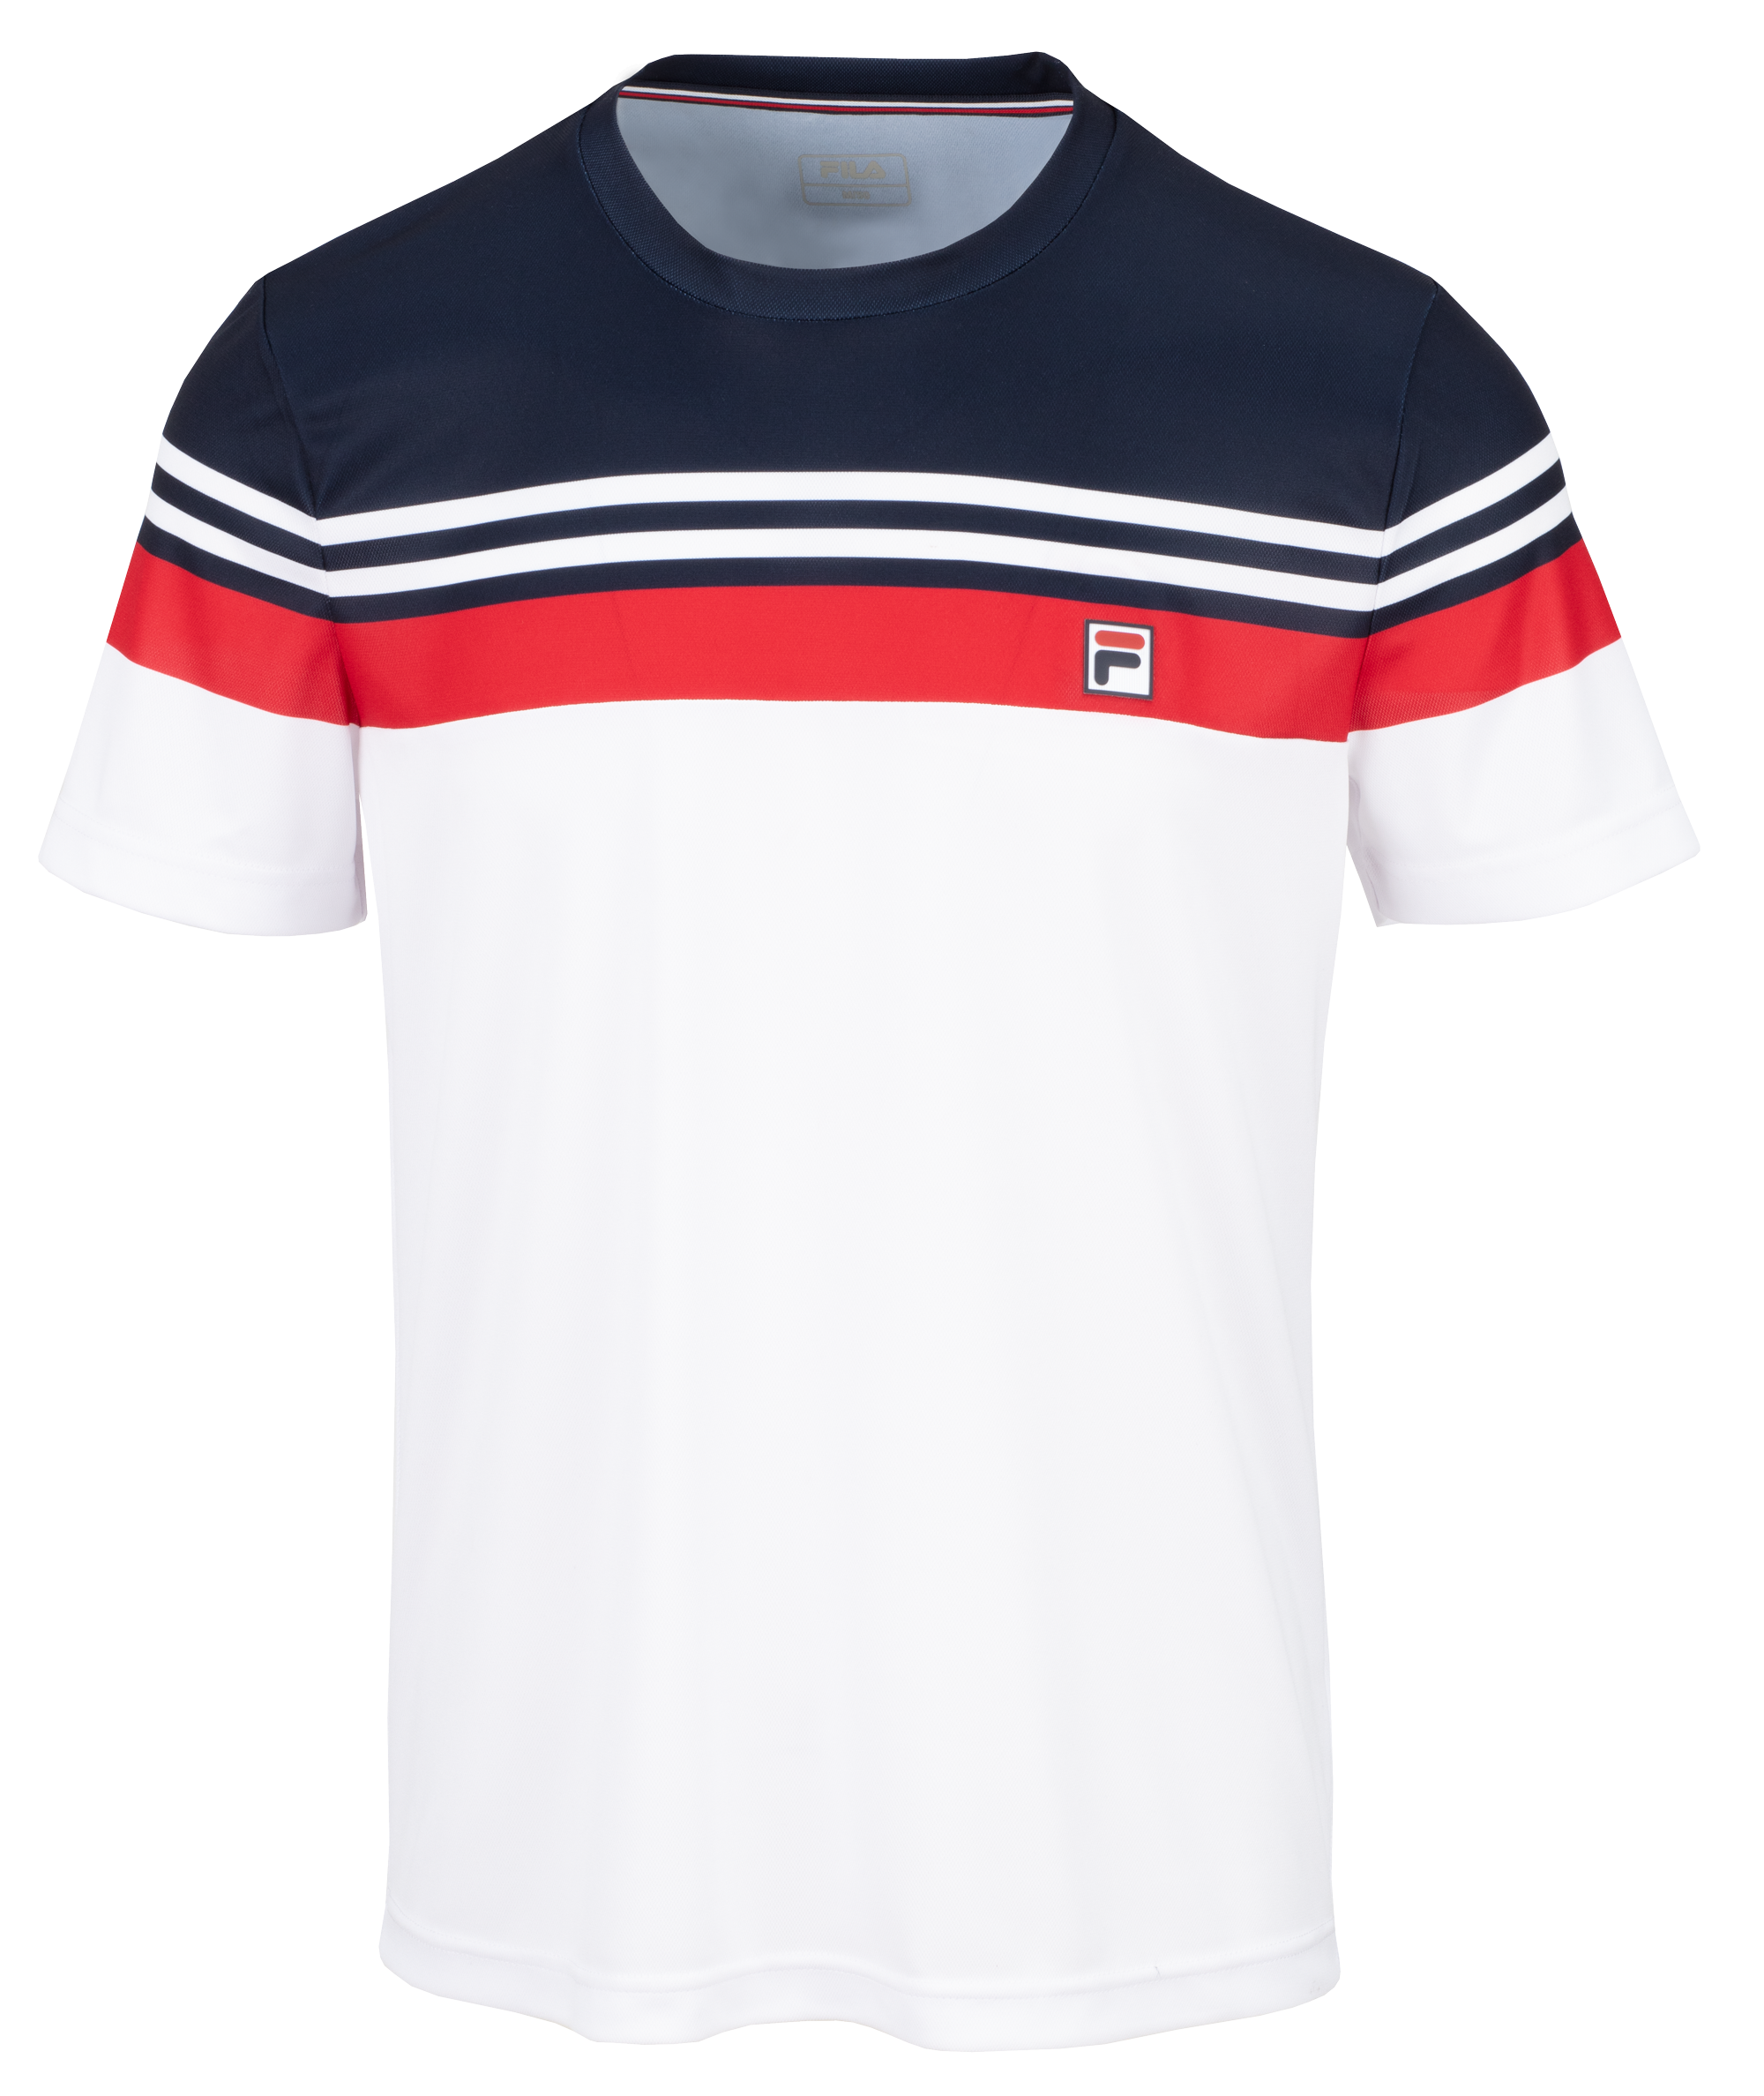 Malte Tennis T-Shirt